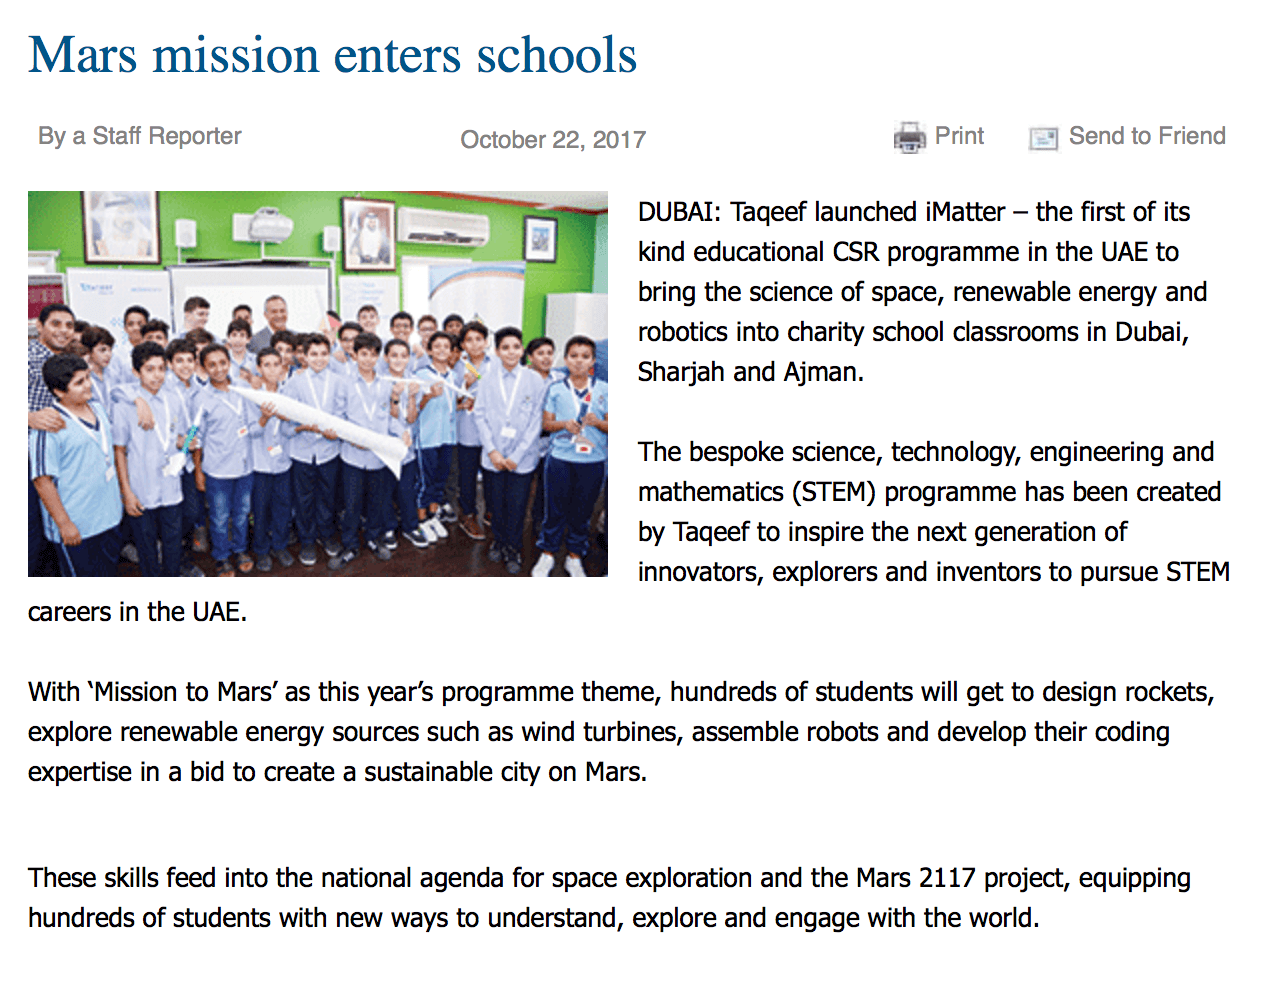 Mars mission enters school